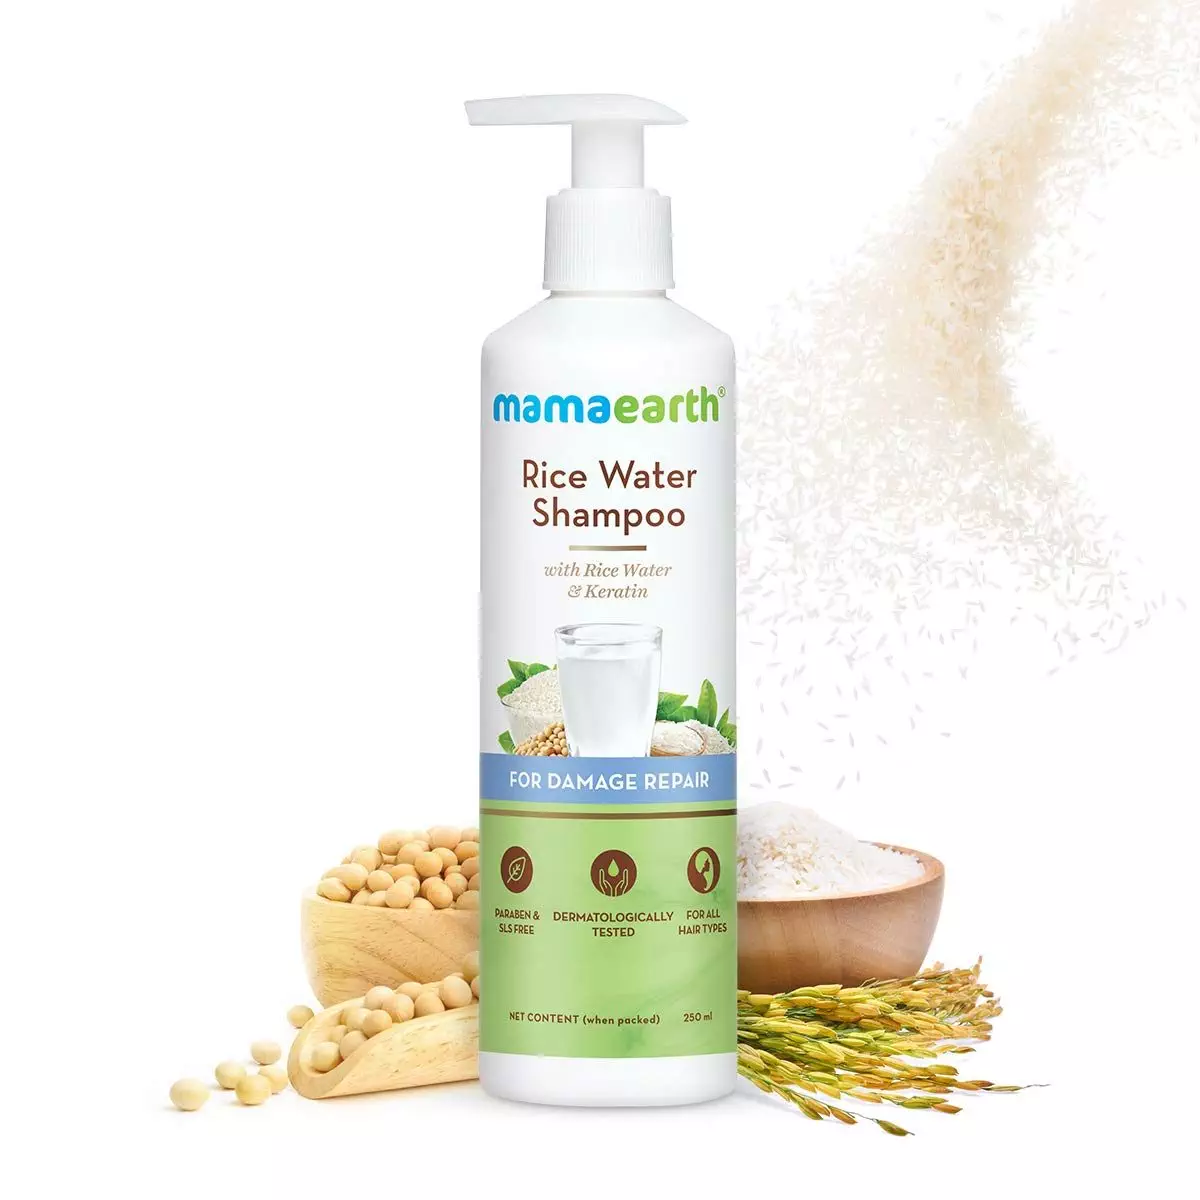 Mamaearth Rice Water Shampoo Review 25